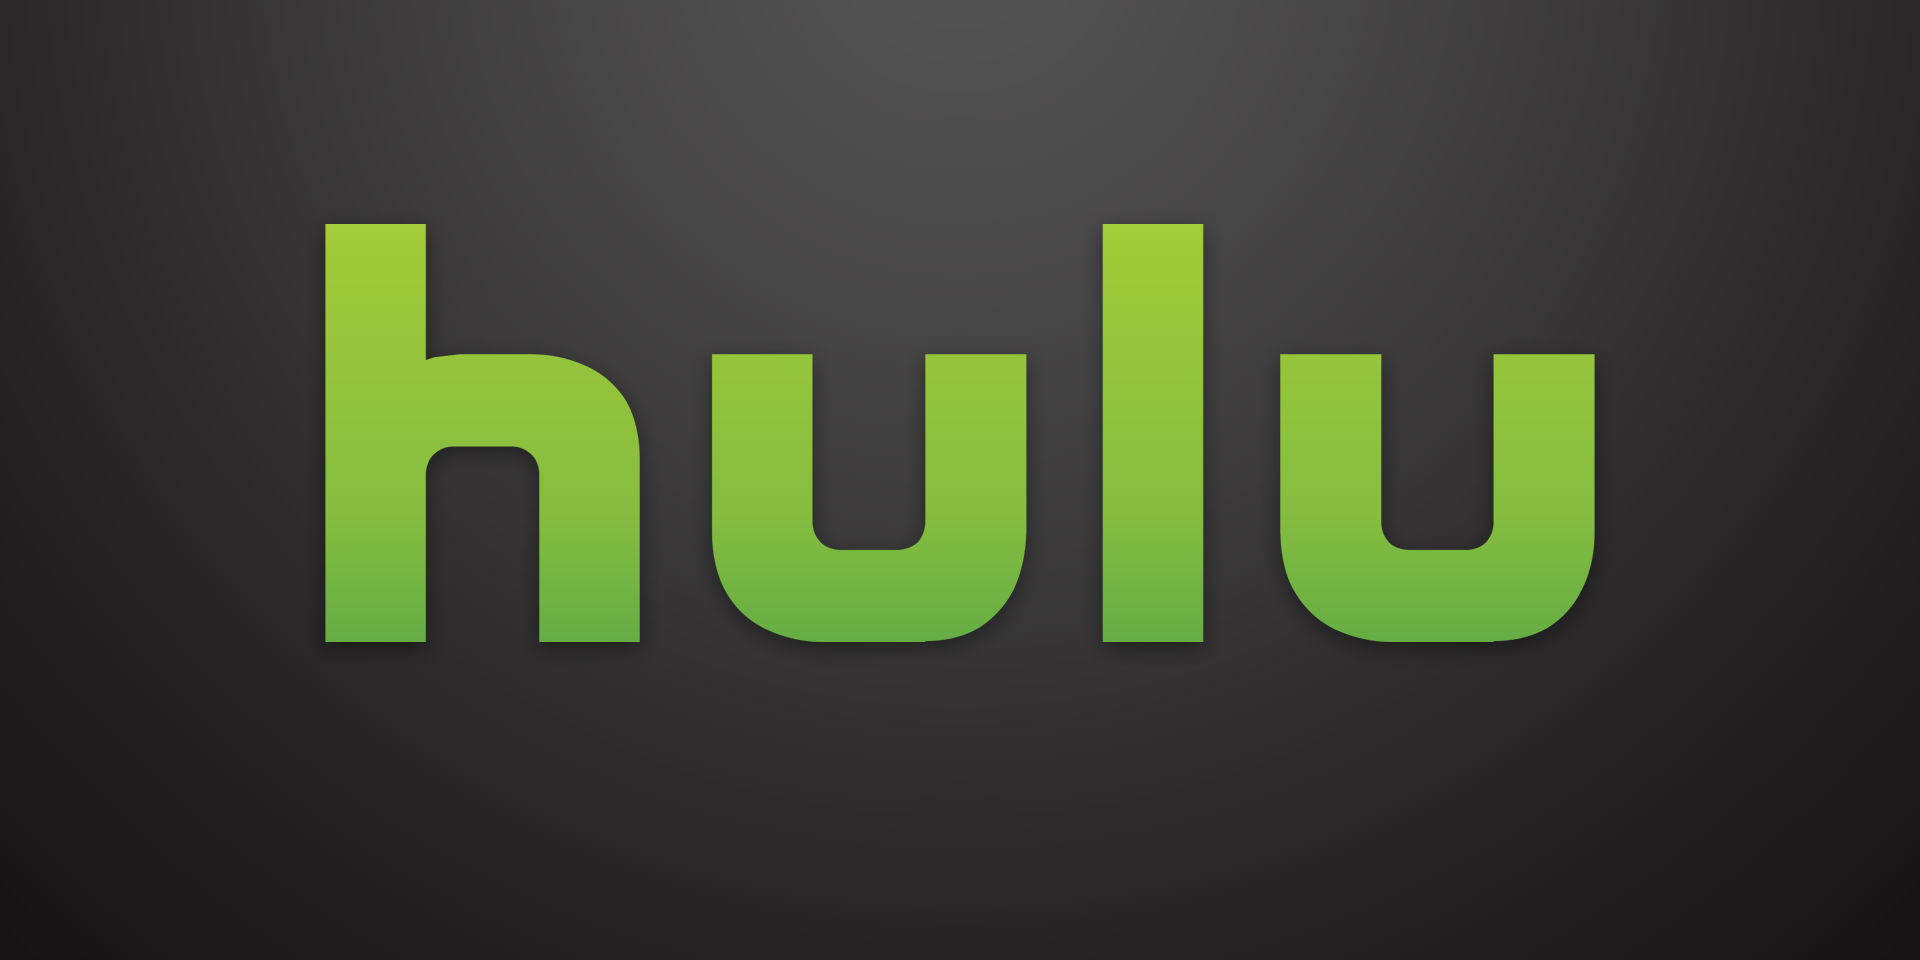 Hulu. Font: Screenrant